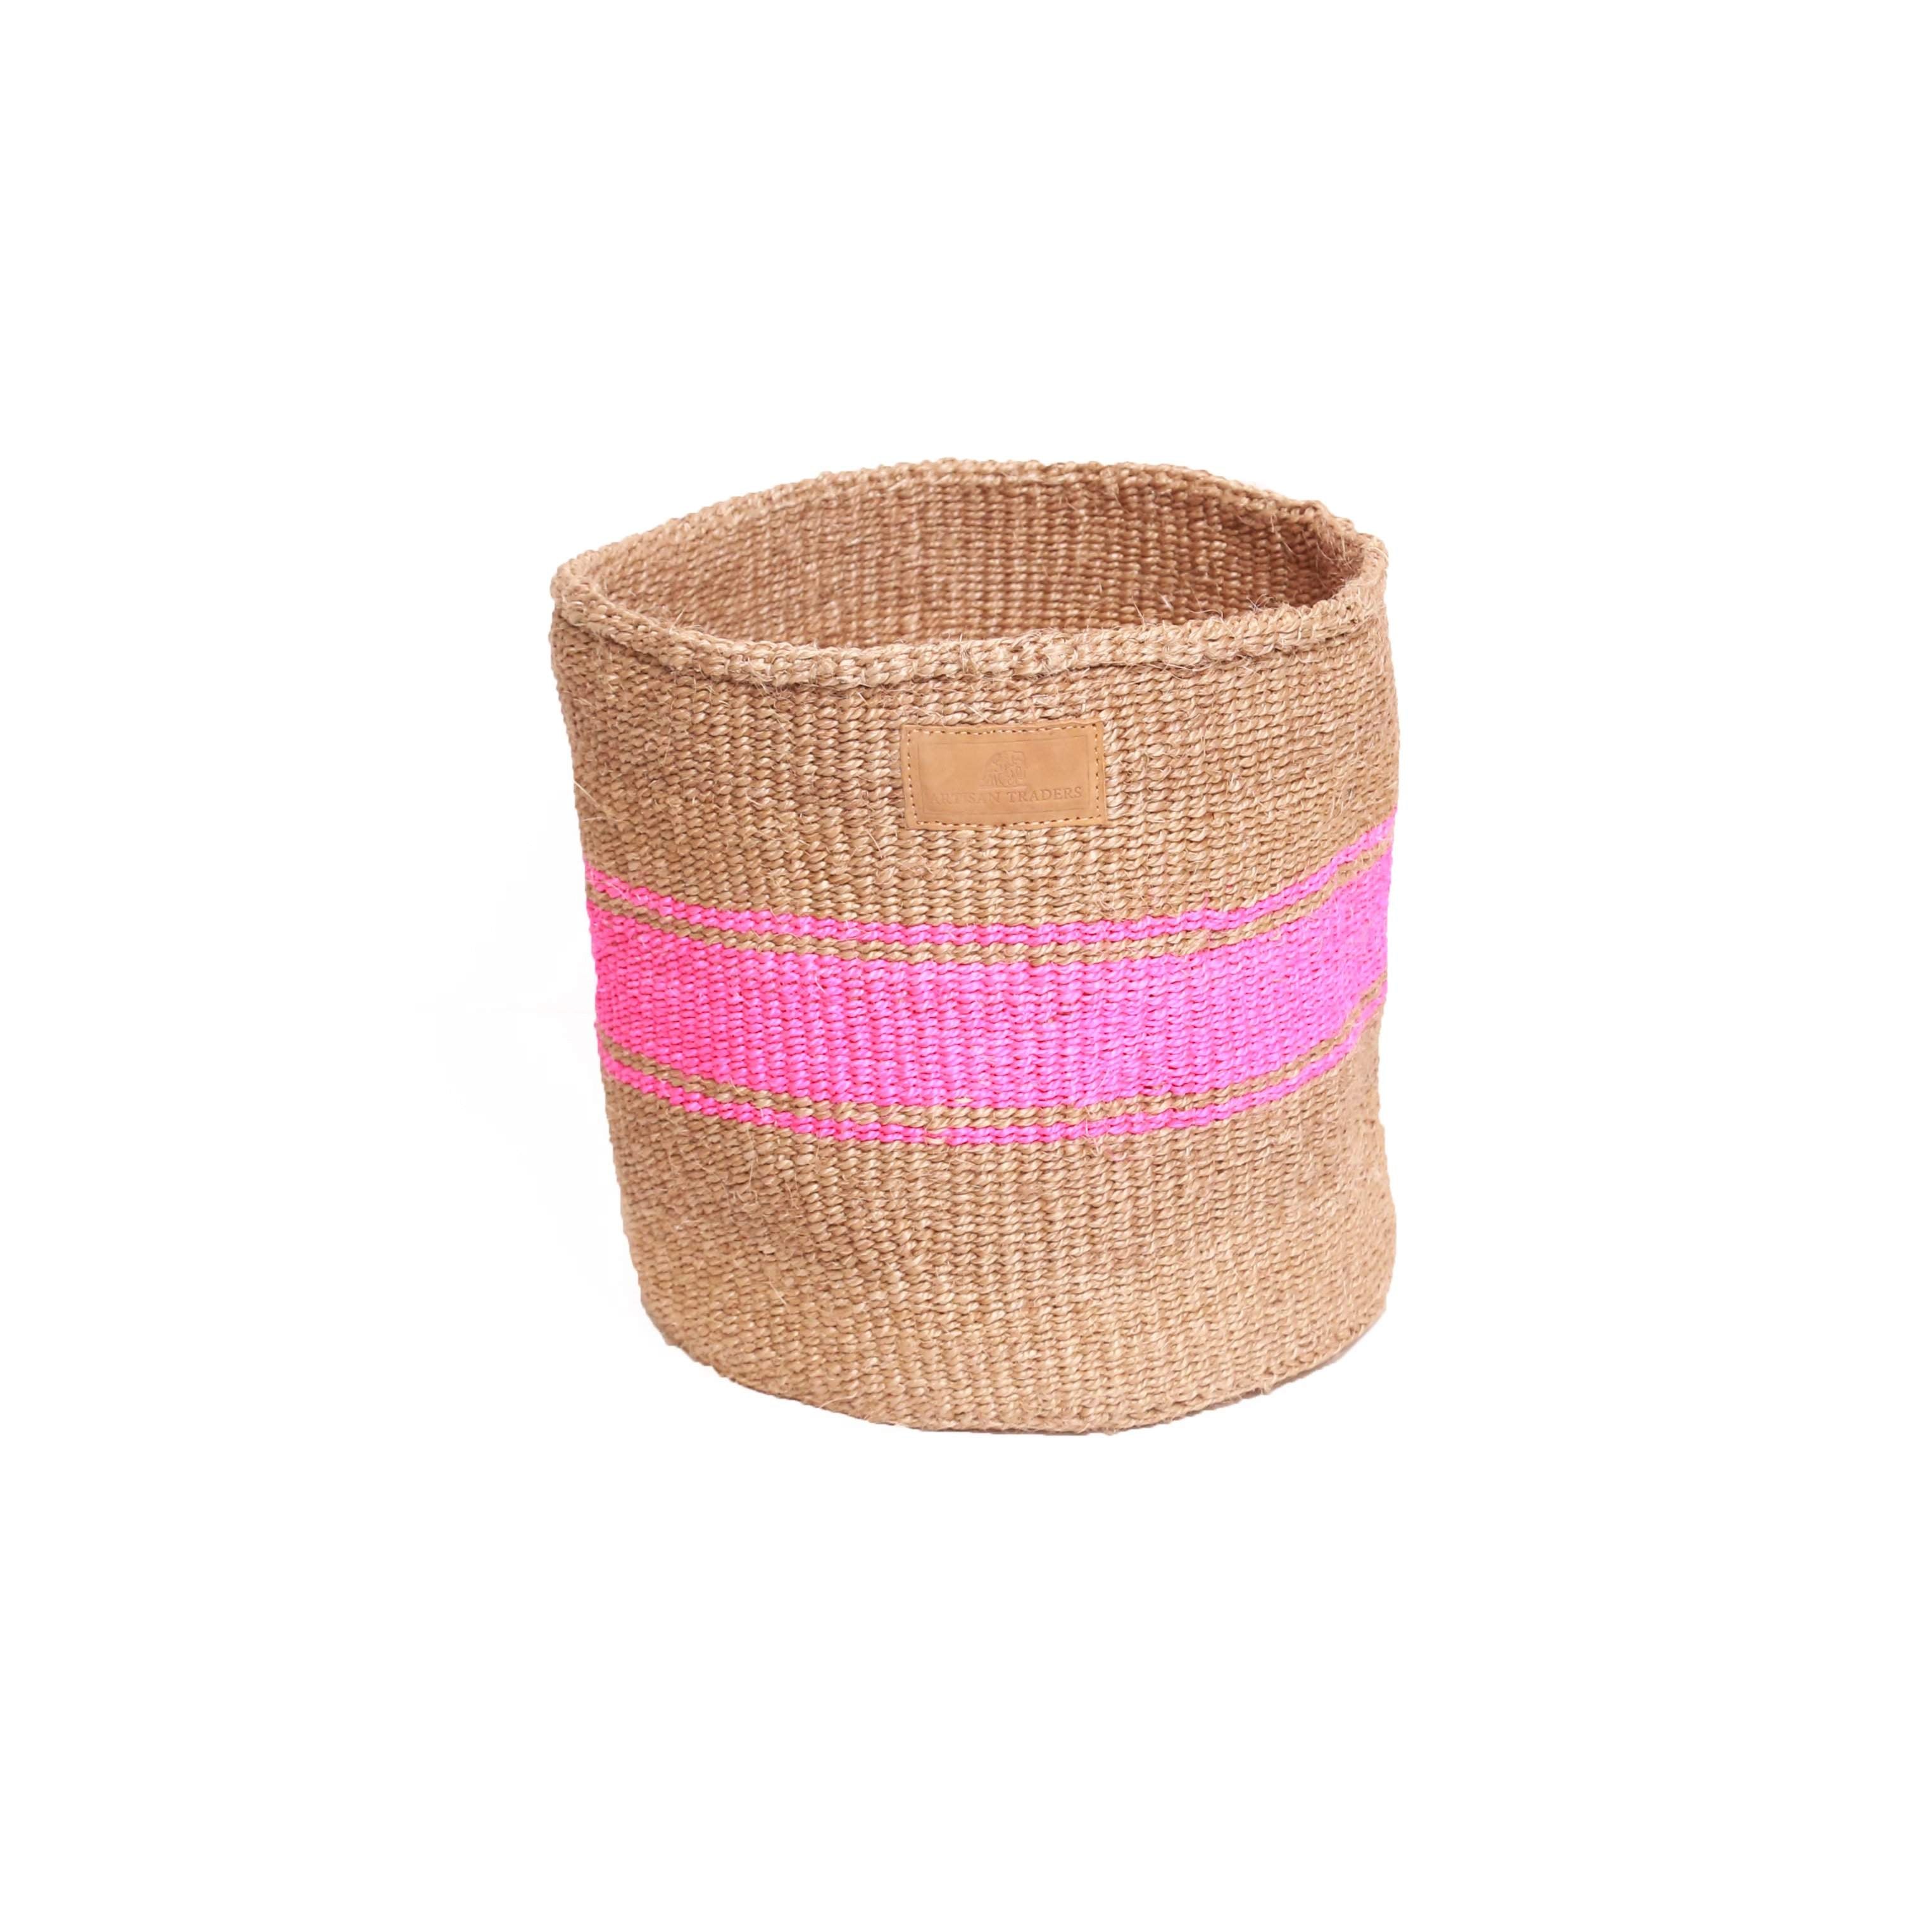 Kiondoo basket Pink Stripe broad M-Artisan Traders-african basket,basket,fairtrade,handcrafted,kenya,kiondo,natural,sisal